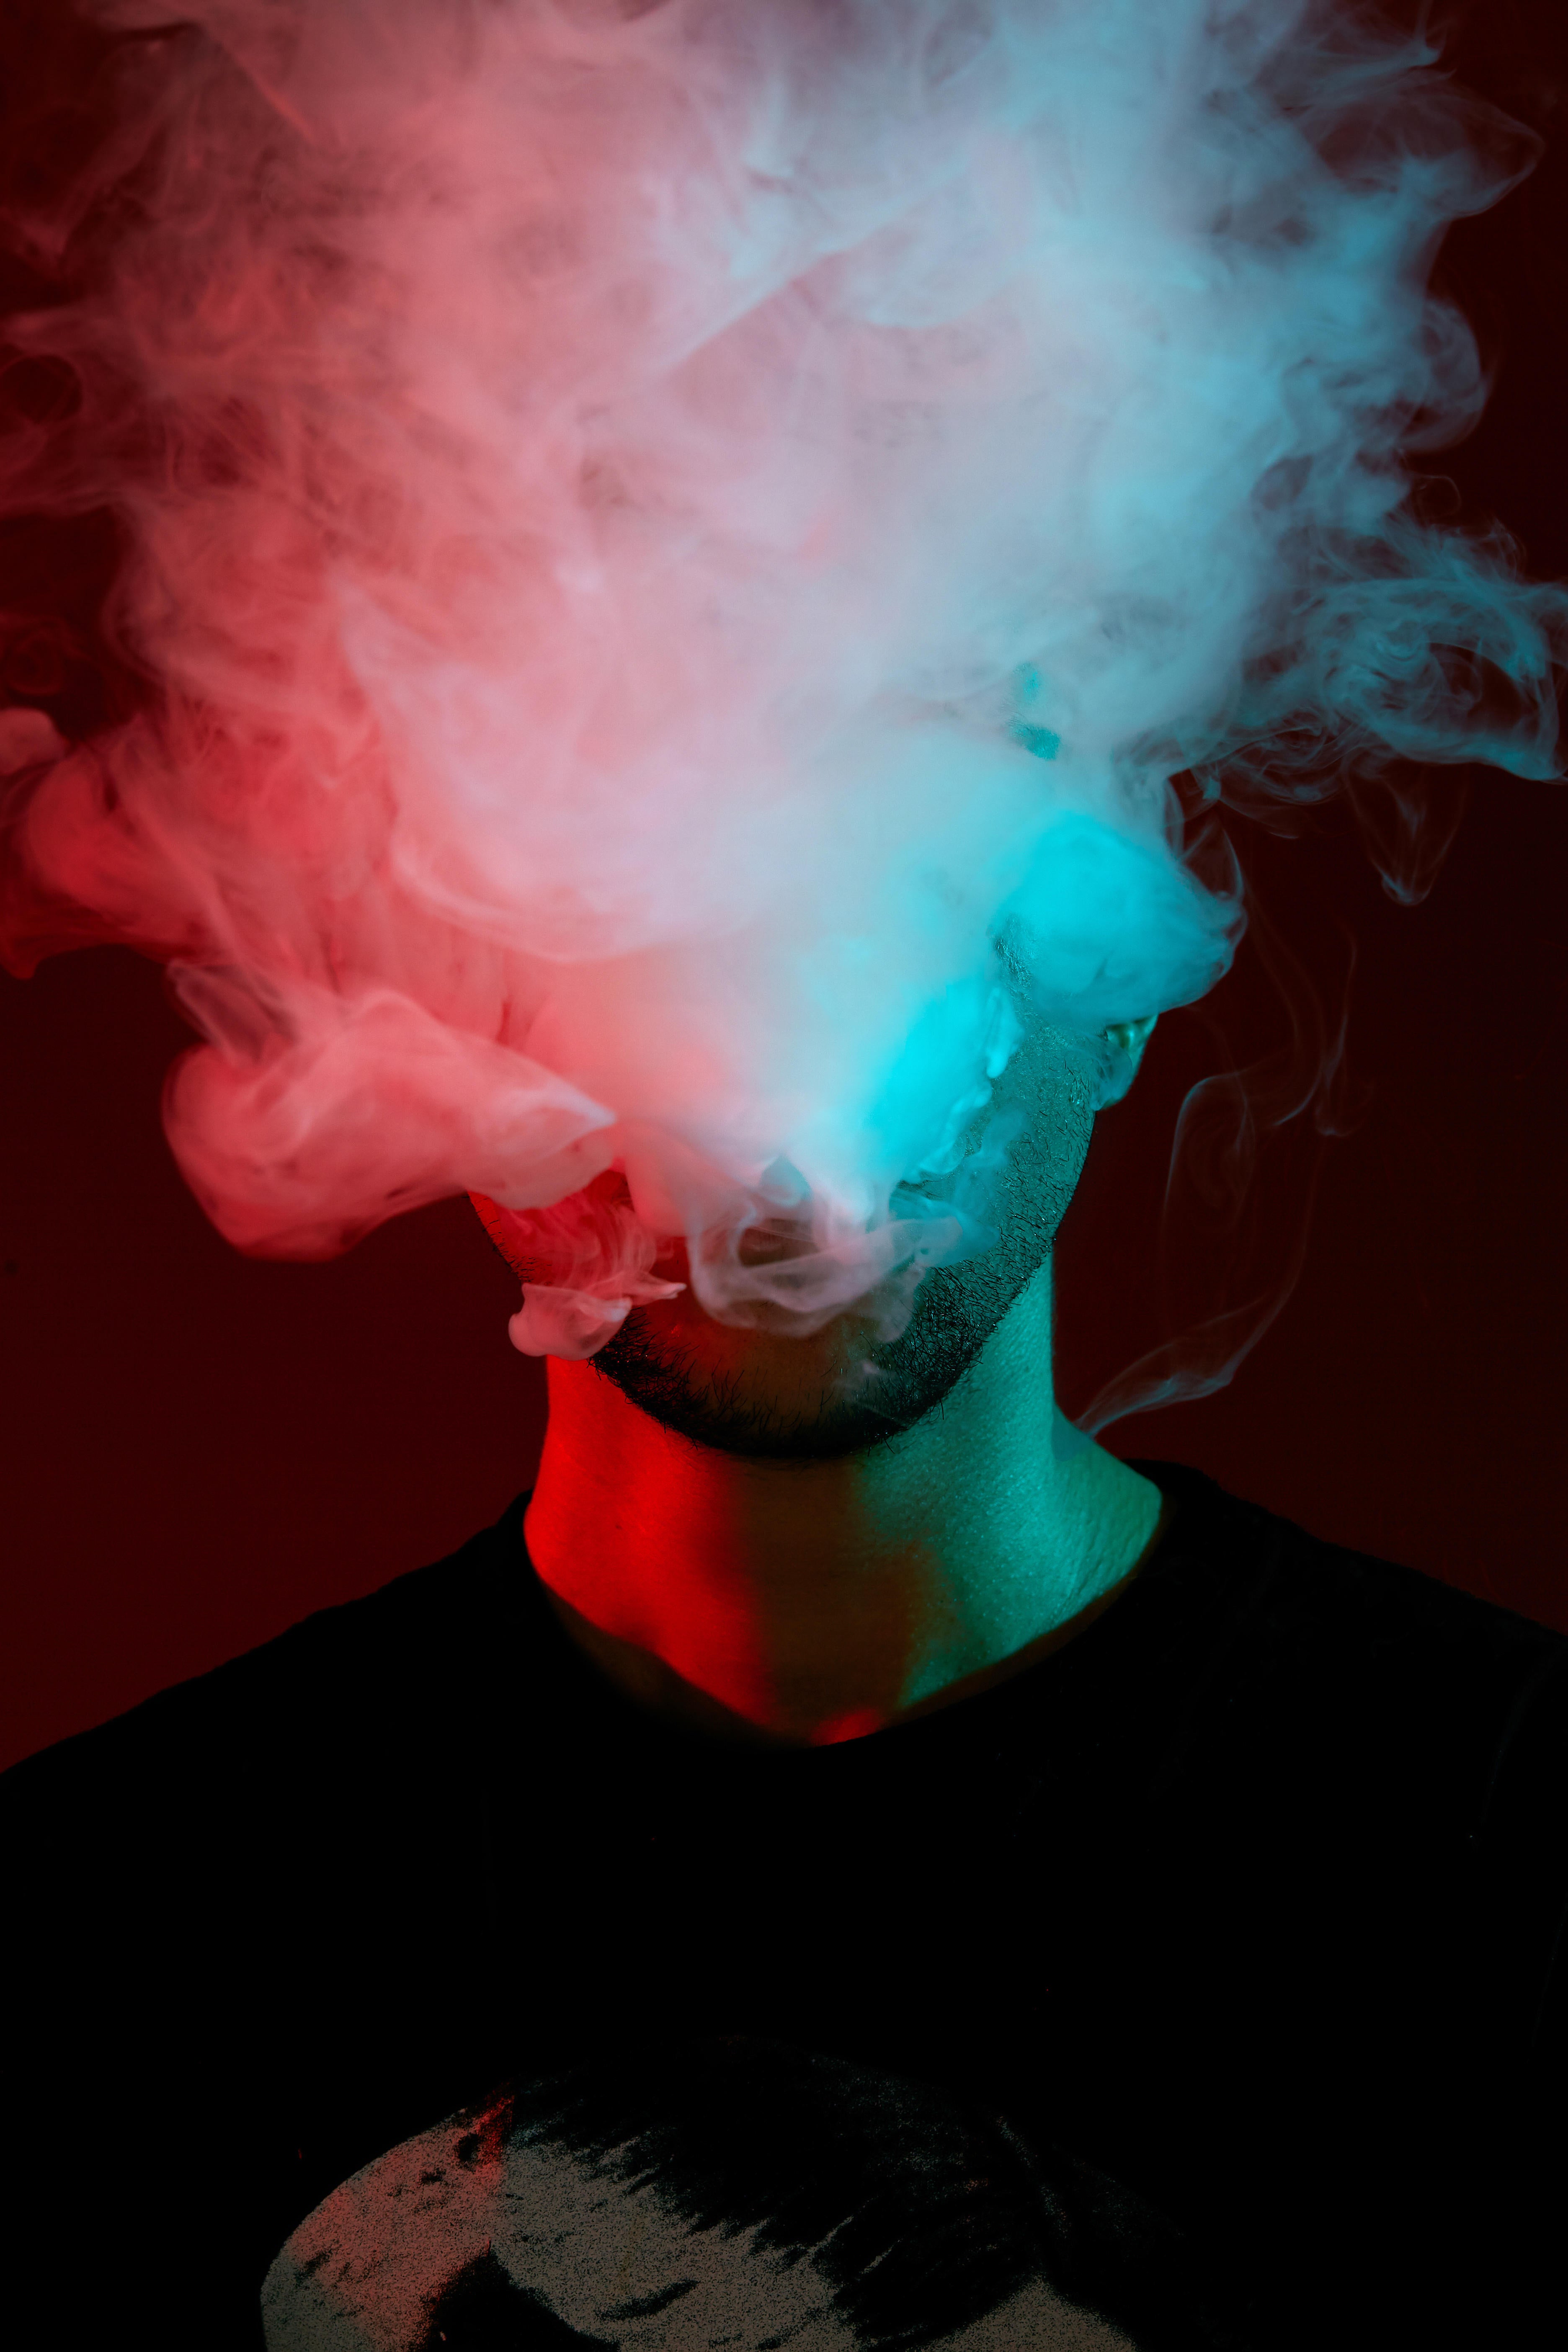 Man blows smoke, uses a vaping device